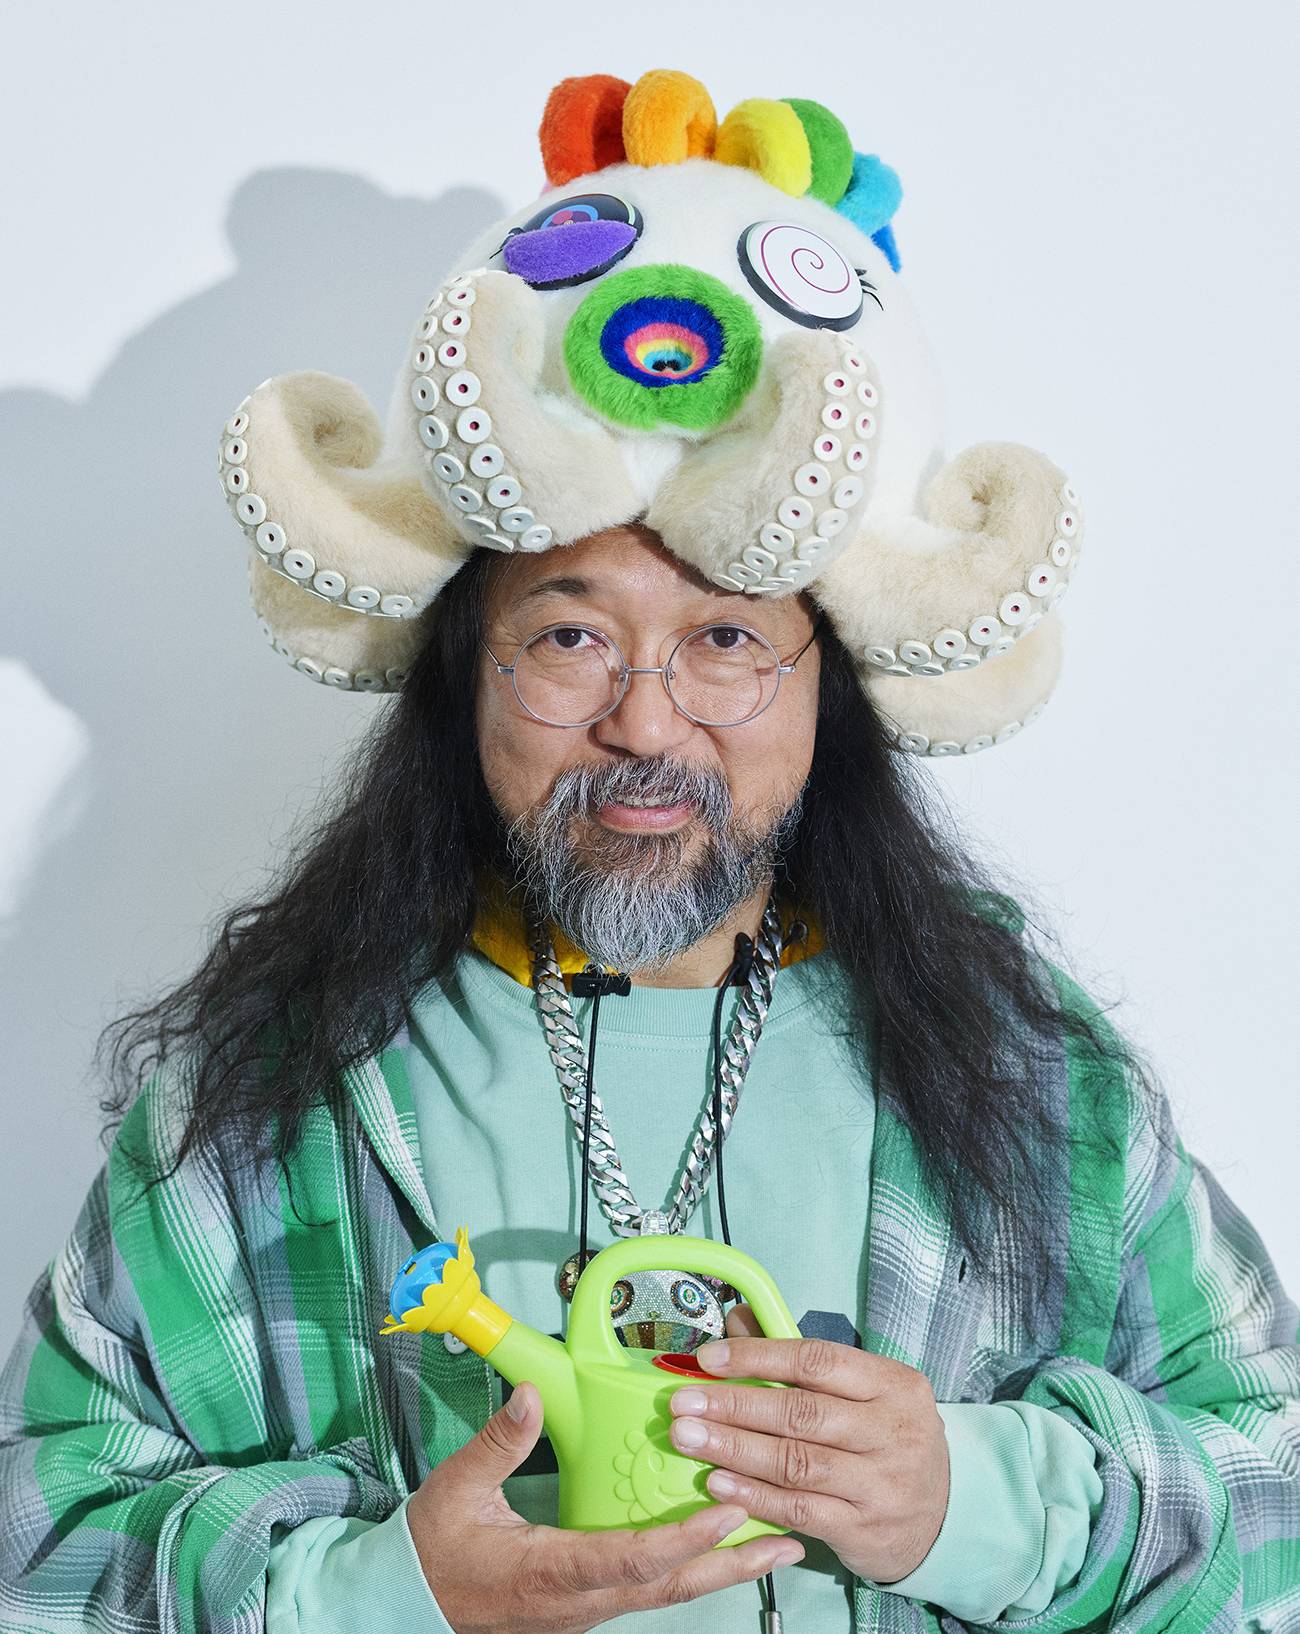 Les confidences de Takashi Murakami, superstar mondiale de l'art contemporain